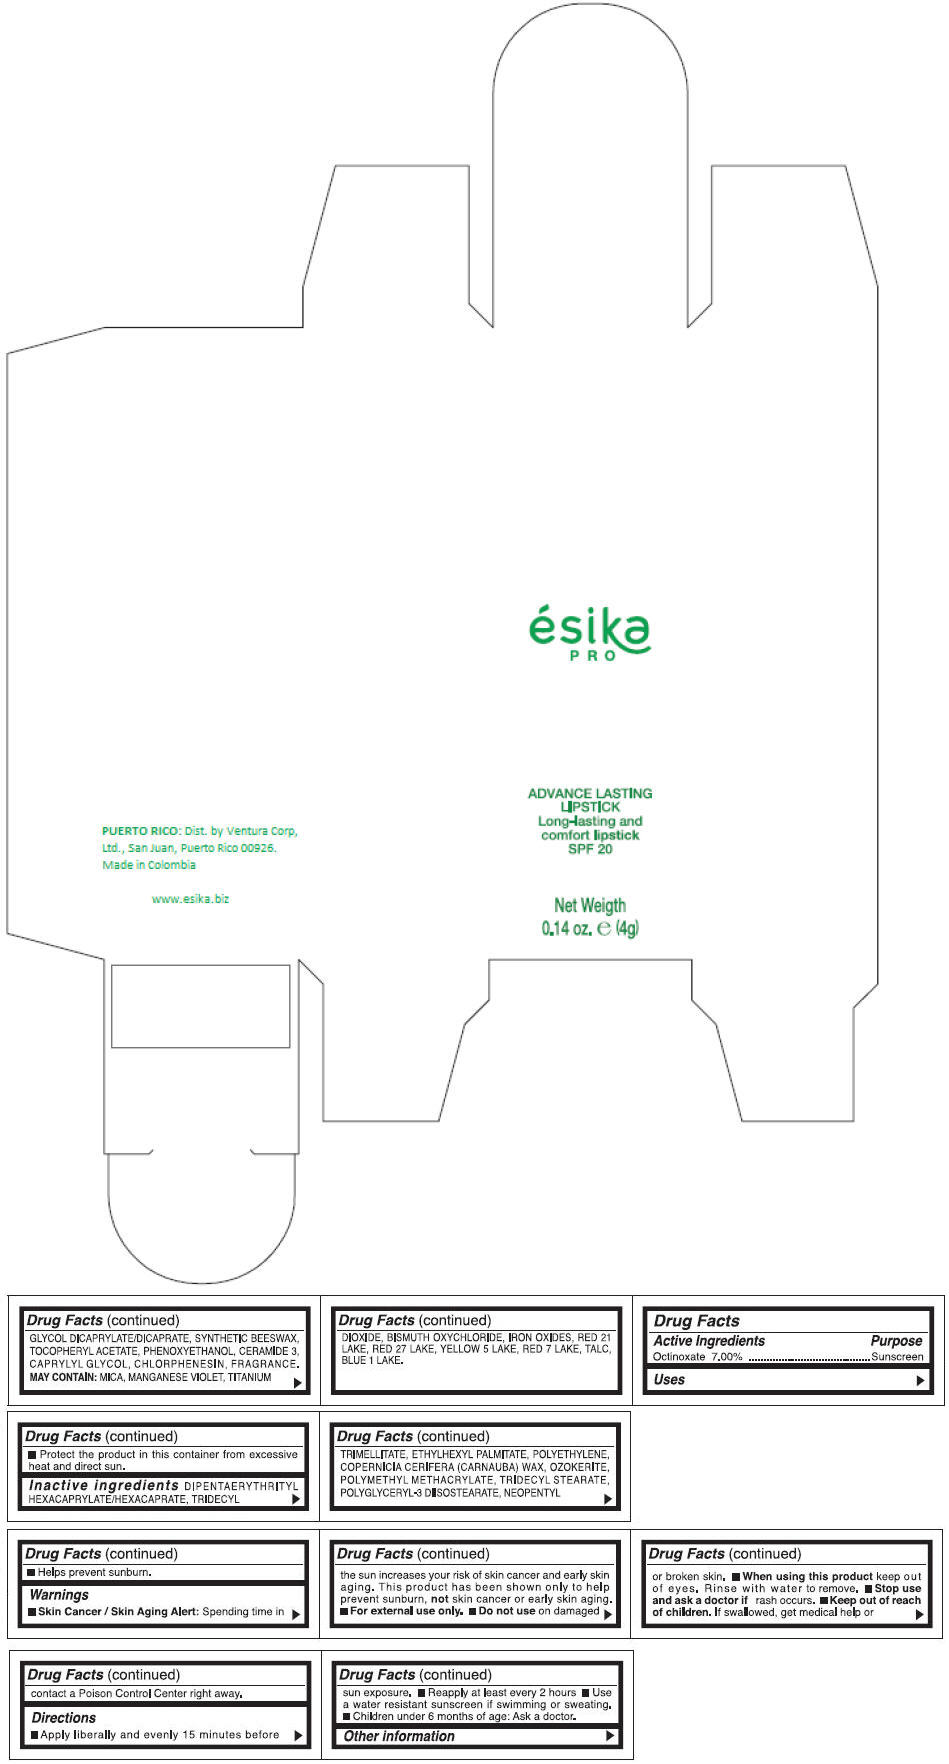 PRINCIPAL DISPLAY PANEL - 4 g Tube Box - (ROJO PASION) - RED